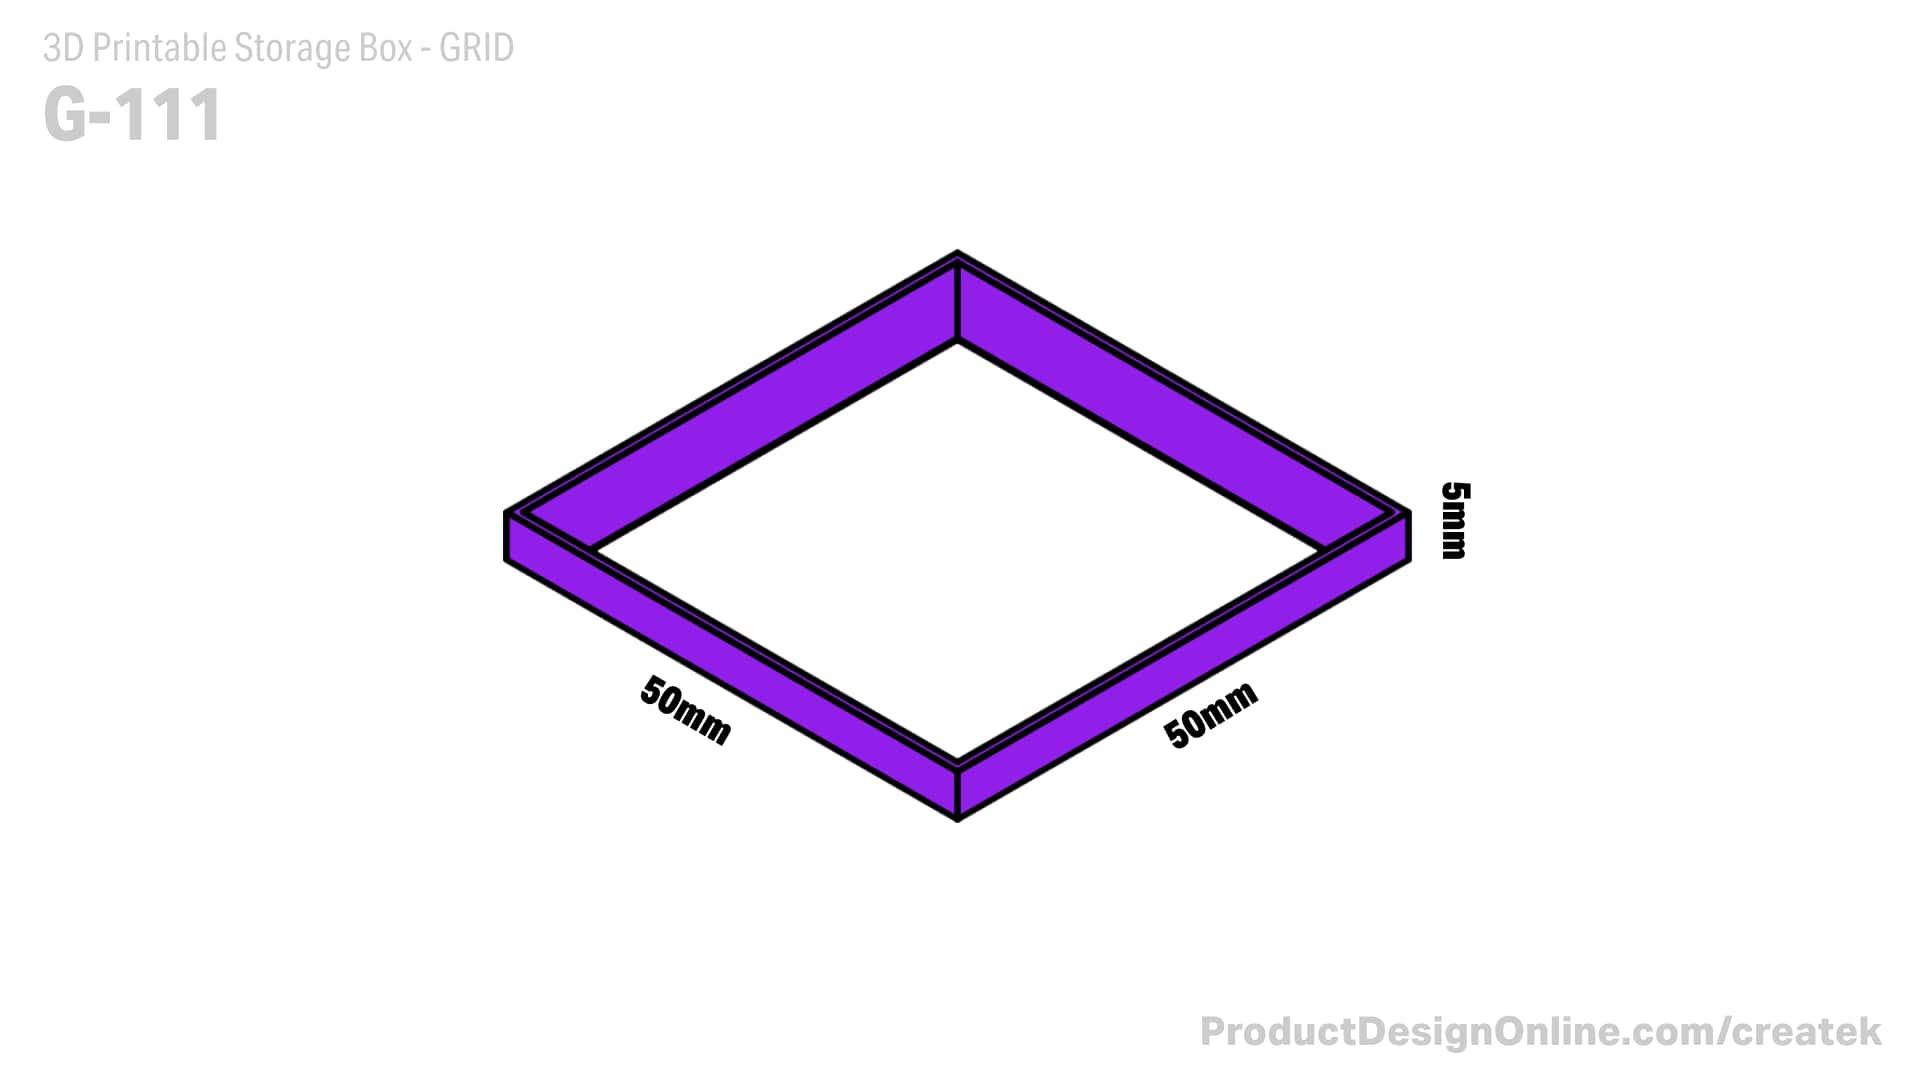 GRID for CREATEK 3D Printable Storage Boxes (STL) 3d model